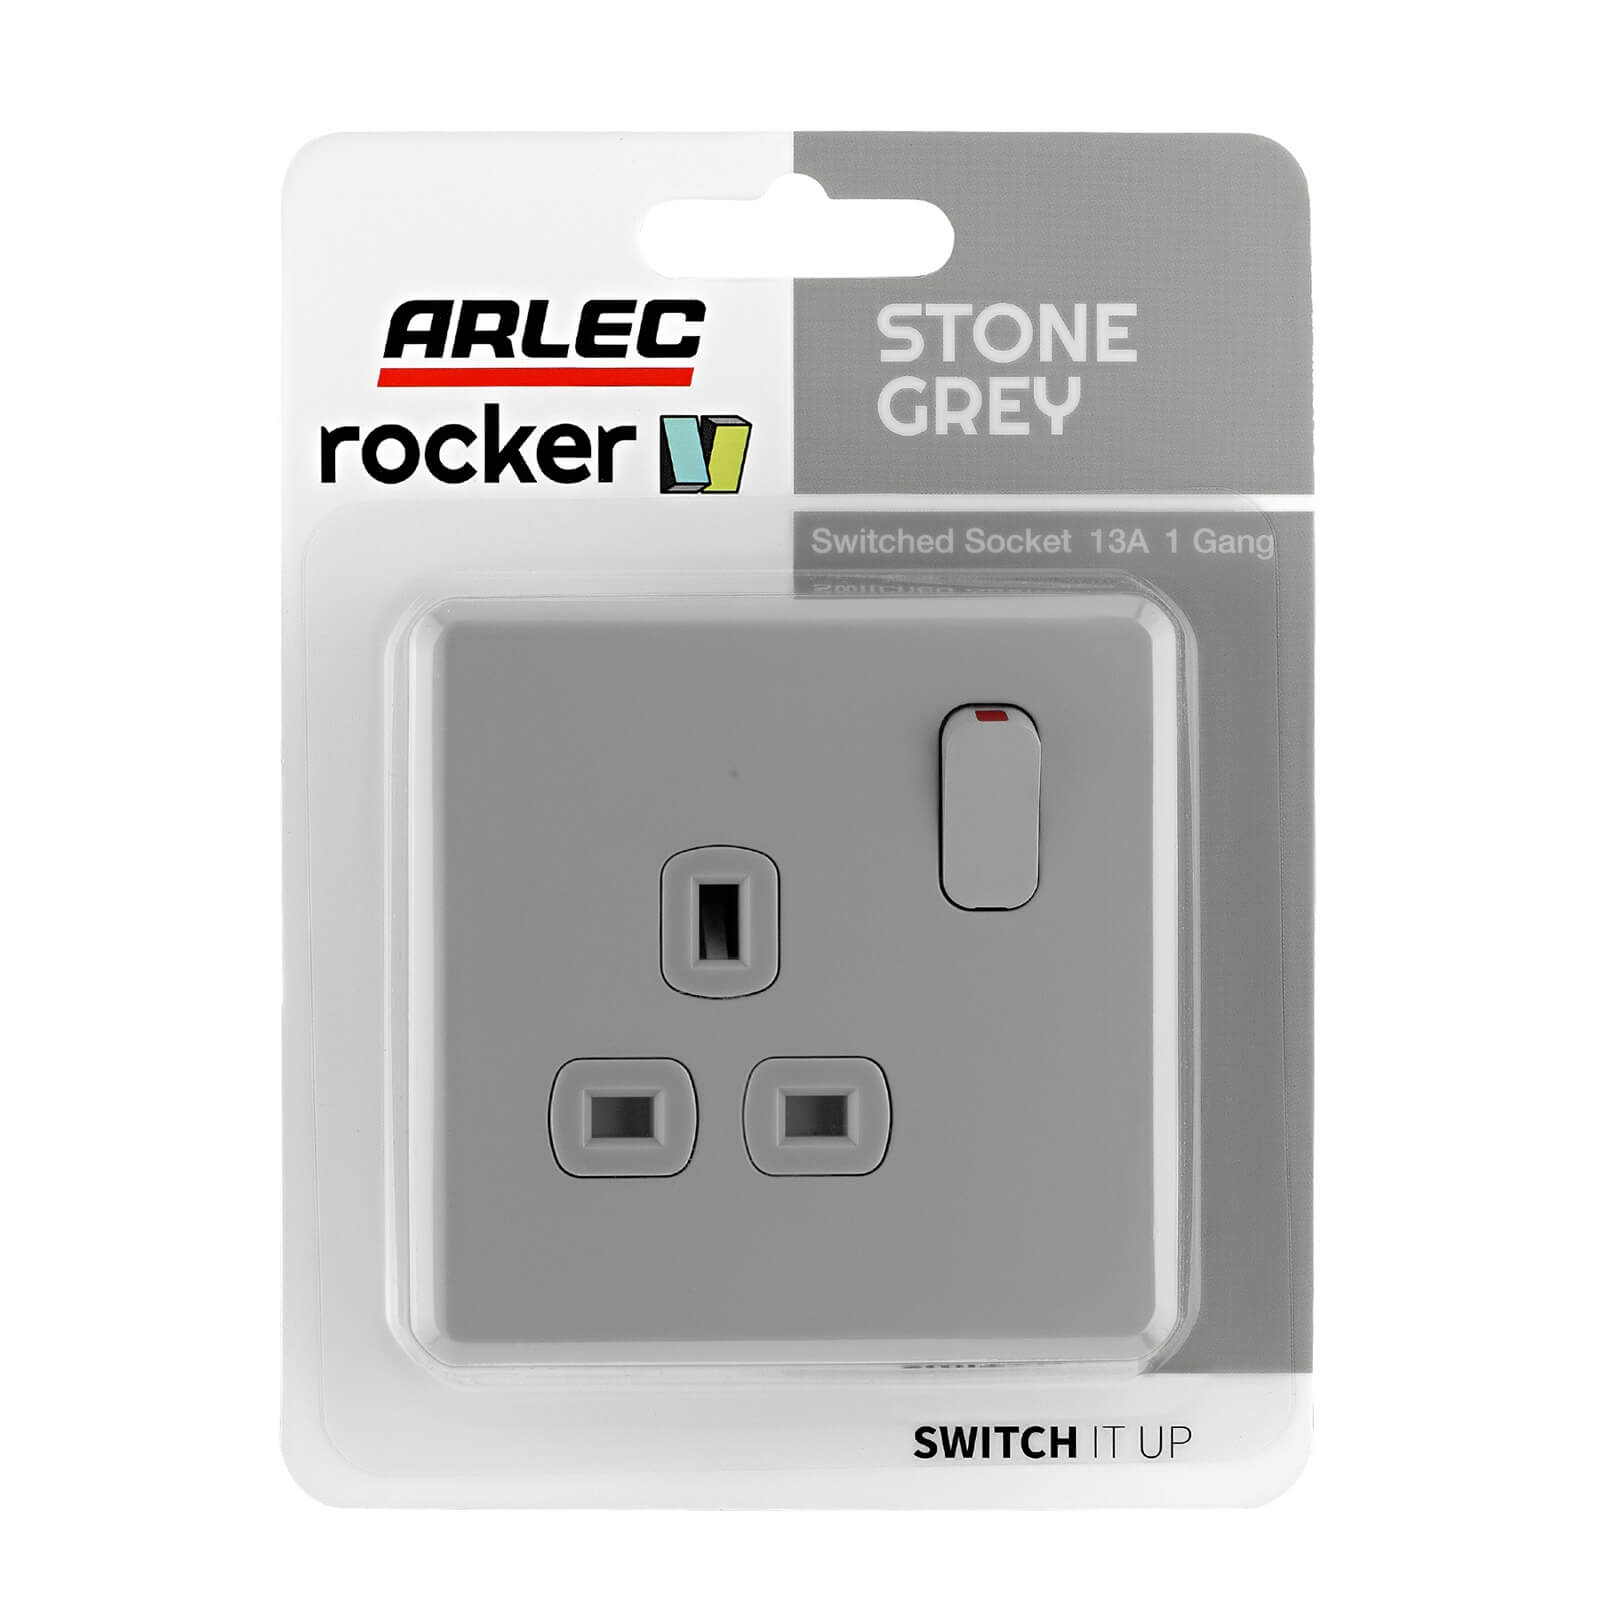 Arlec Rocker  13A 1 Gang Stone Grey Single switched socket